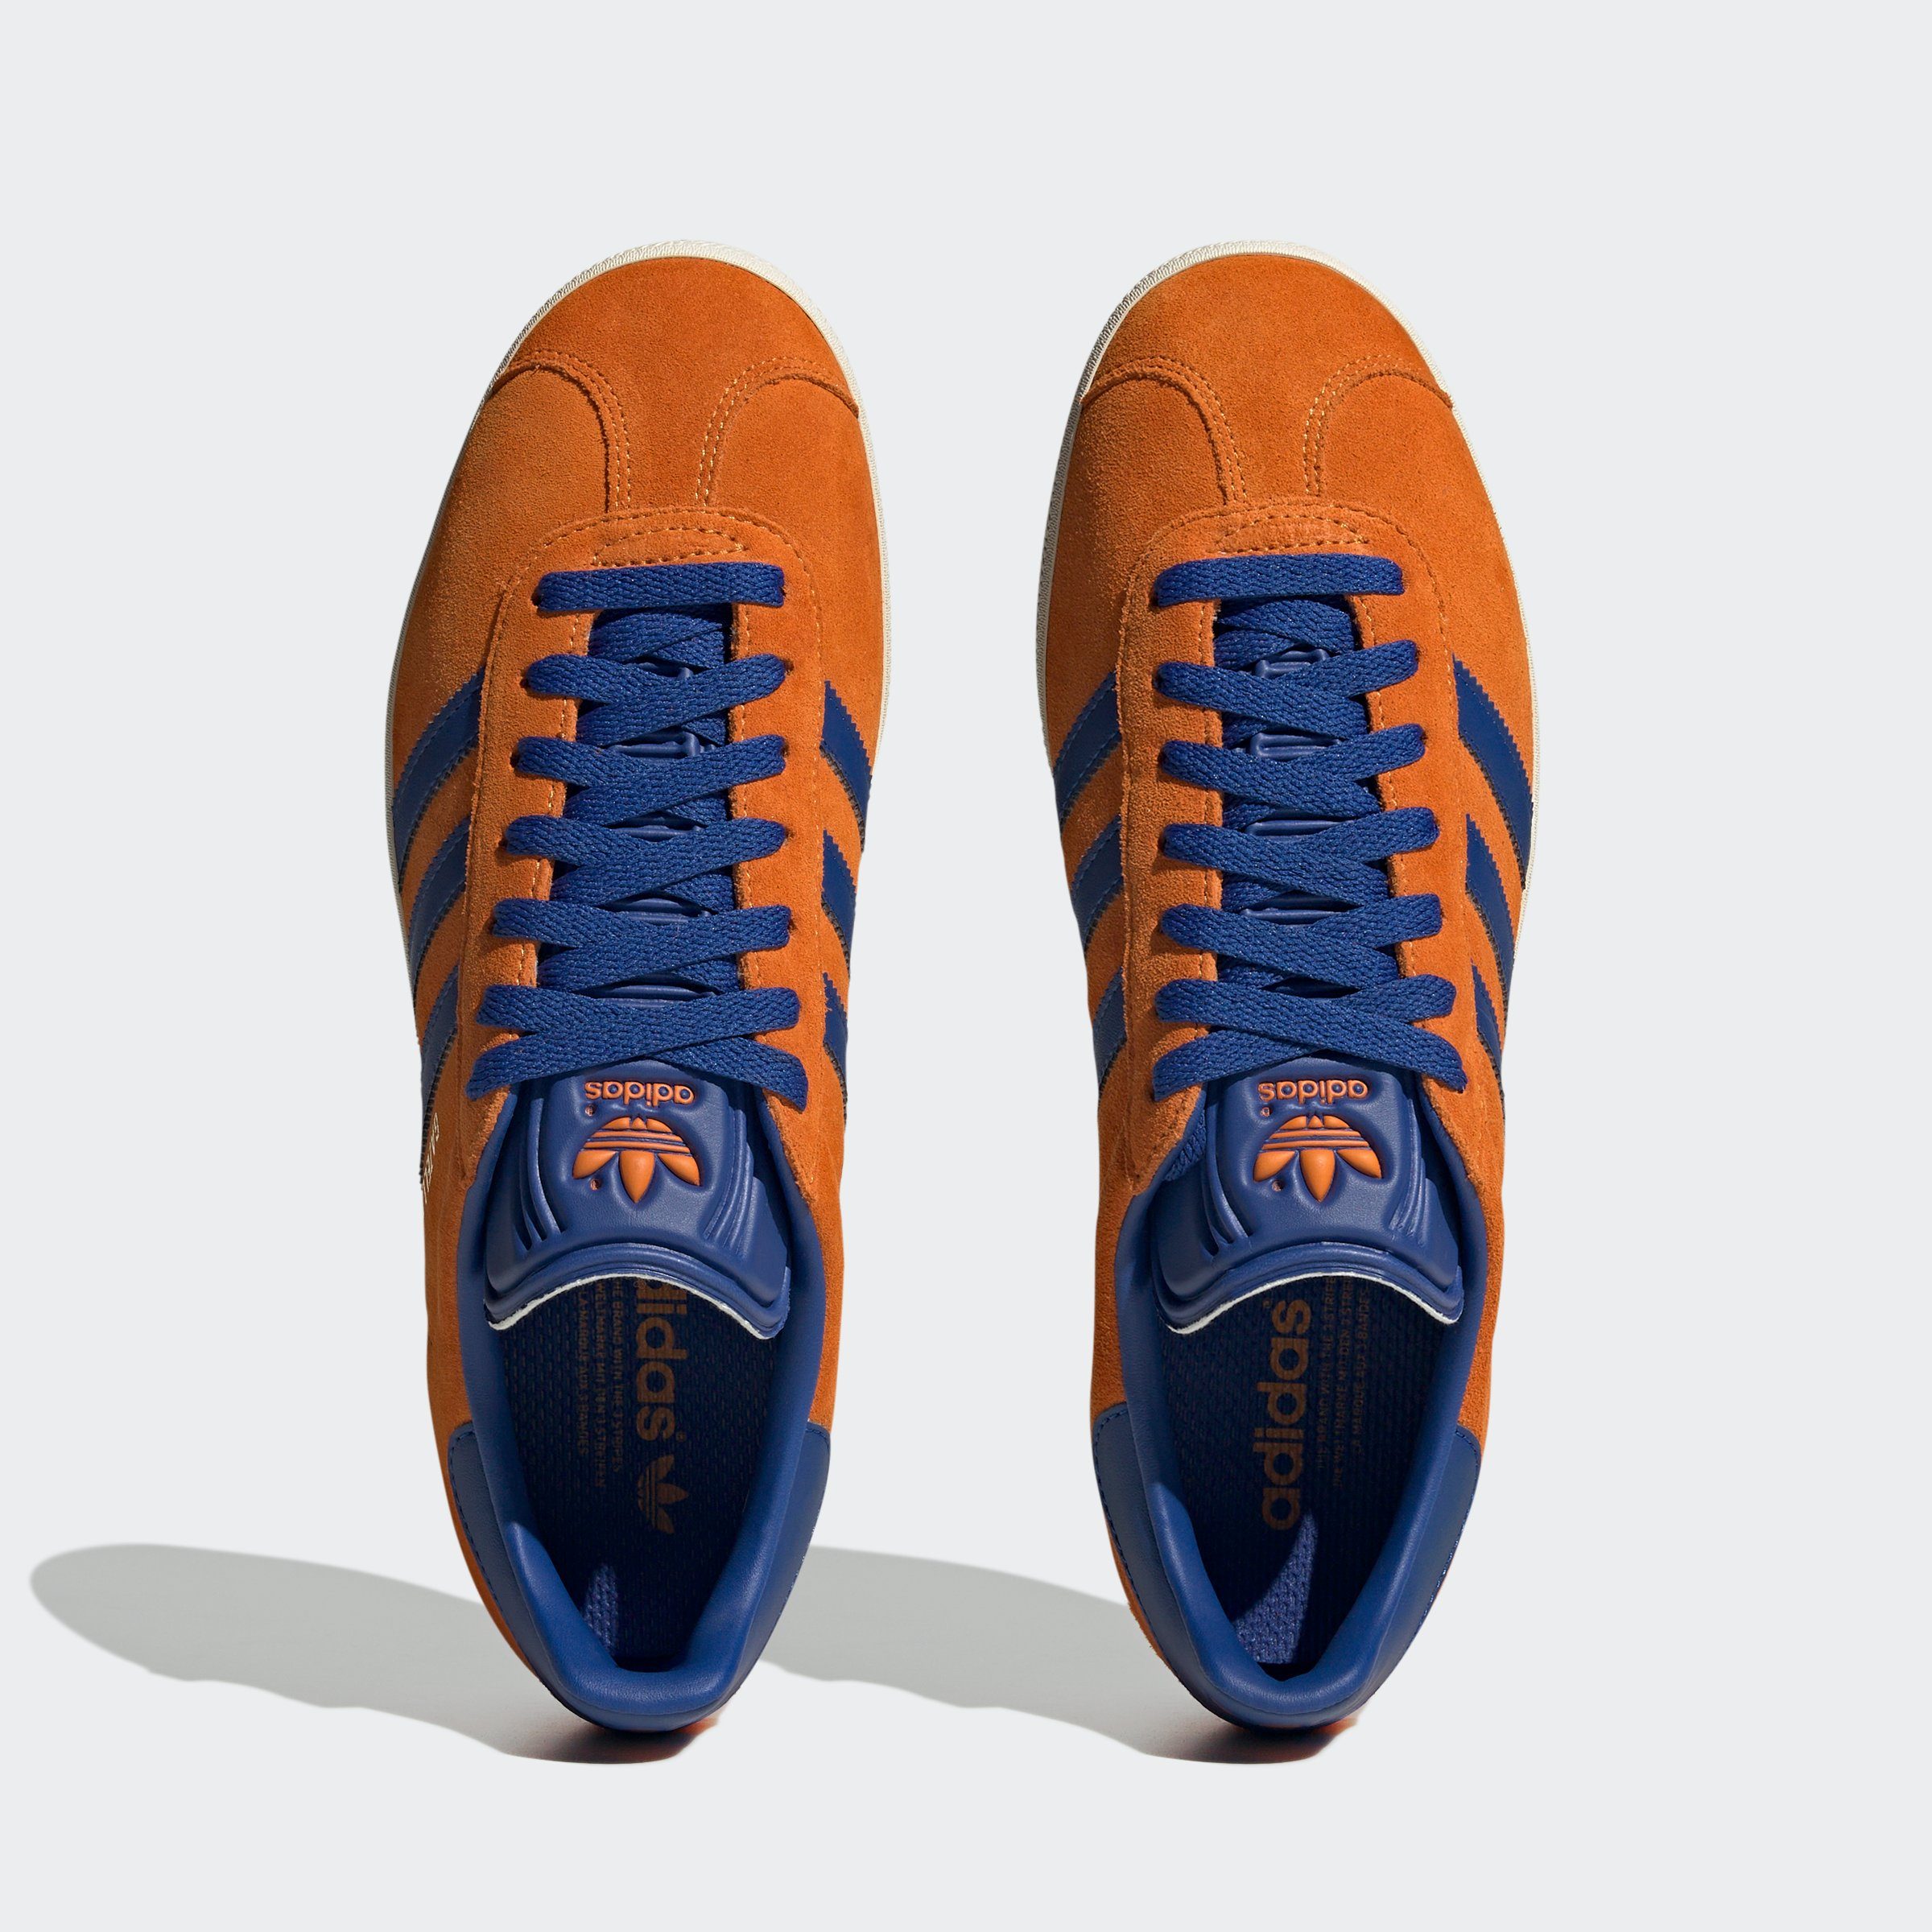 adidas Originals GAZELLE Sneaker Bright / Orange White Royal Chalk / Blue